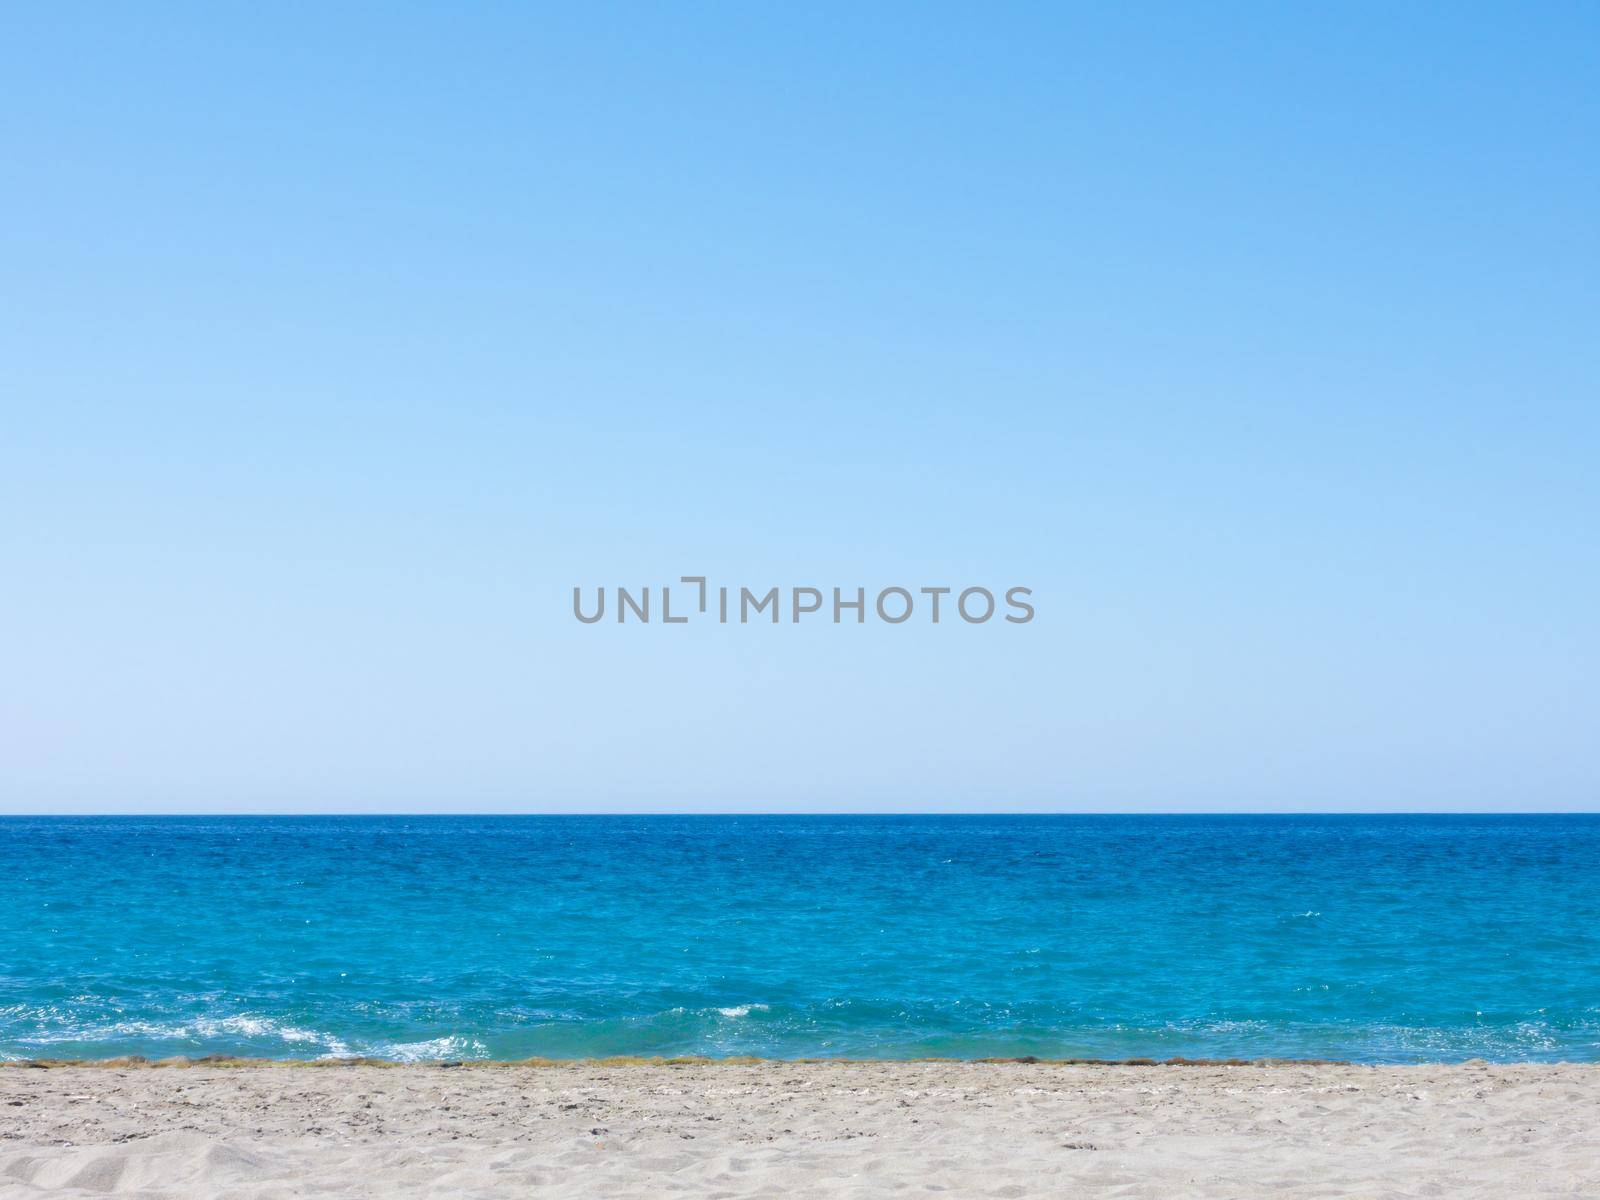 Summer mediterranean beach background. Horizon with calm sea, clear sky and grey sand